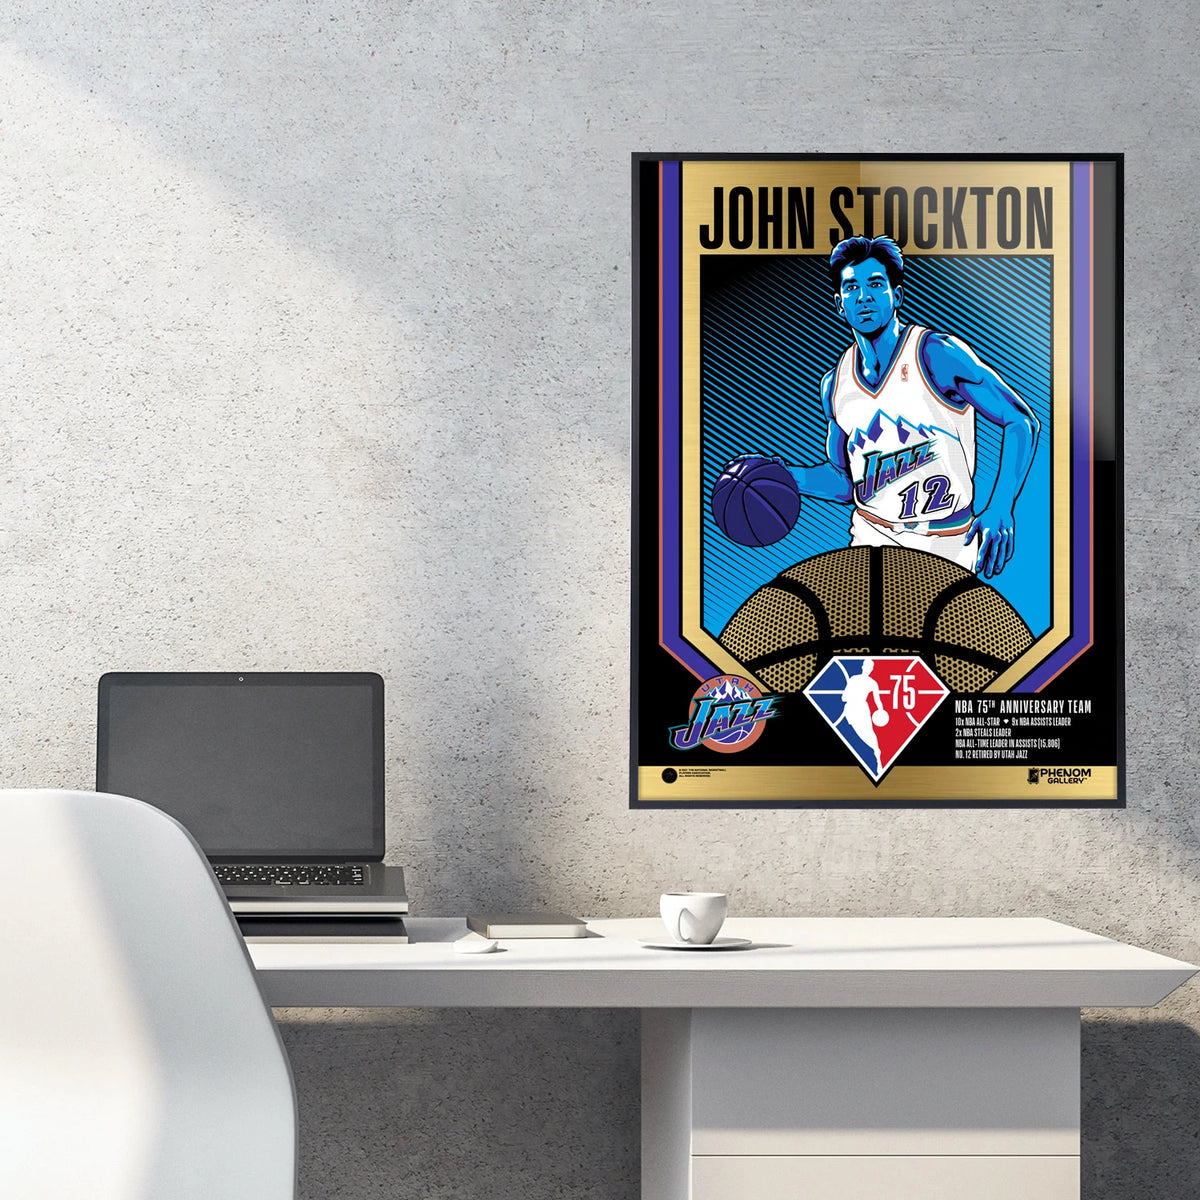 NBA Utah Jazz Phenom Gallery 75th Anniversary John Stockton 18&quot; x 24&quot; Deluxe Framed Gold Foil Serigraph